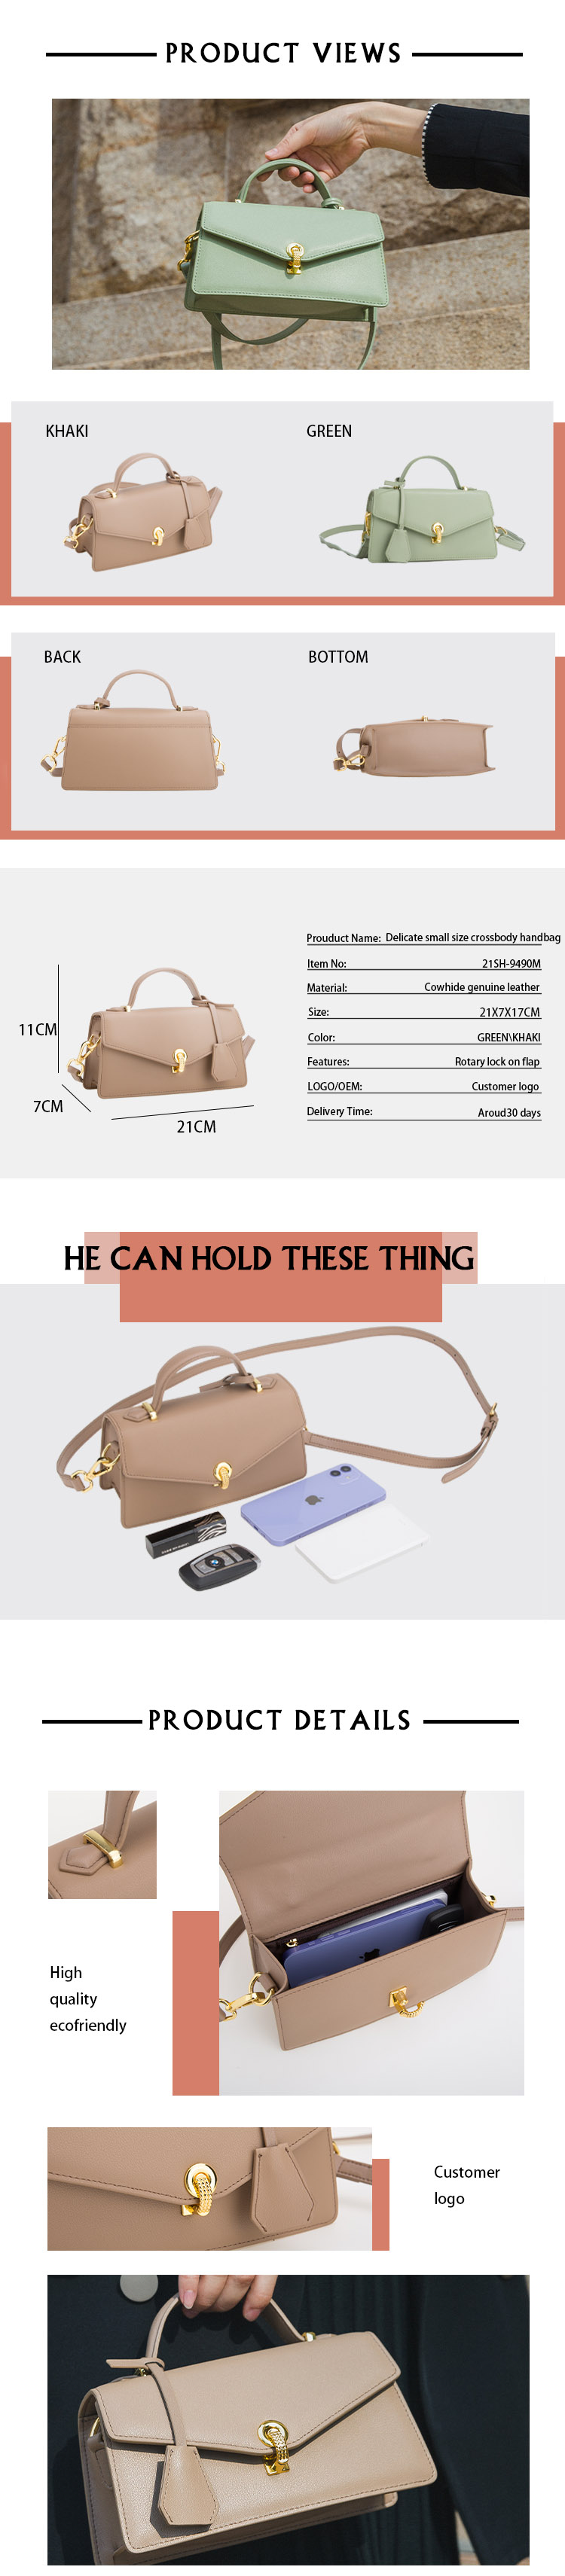 Handbag Details